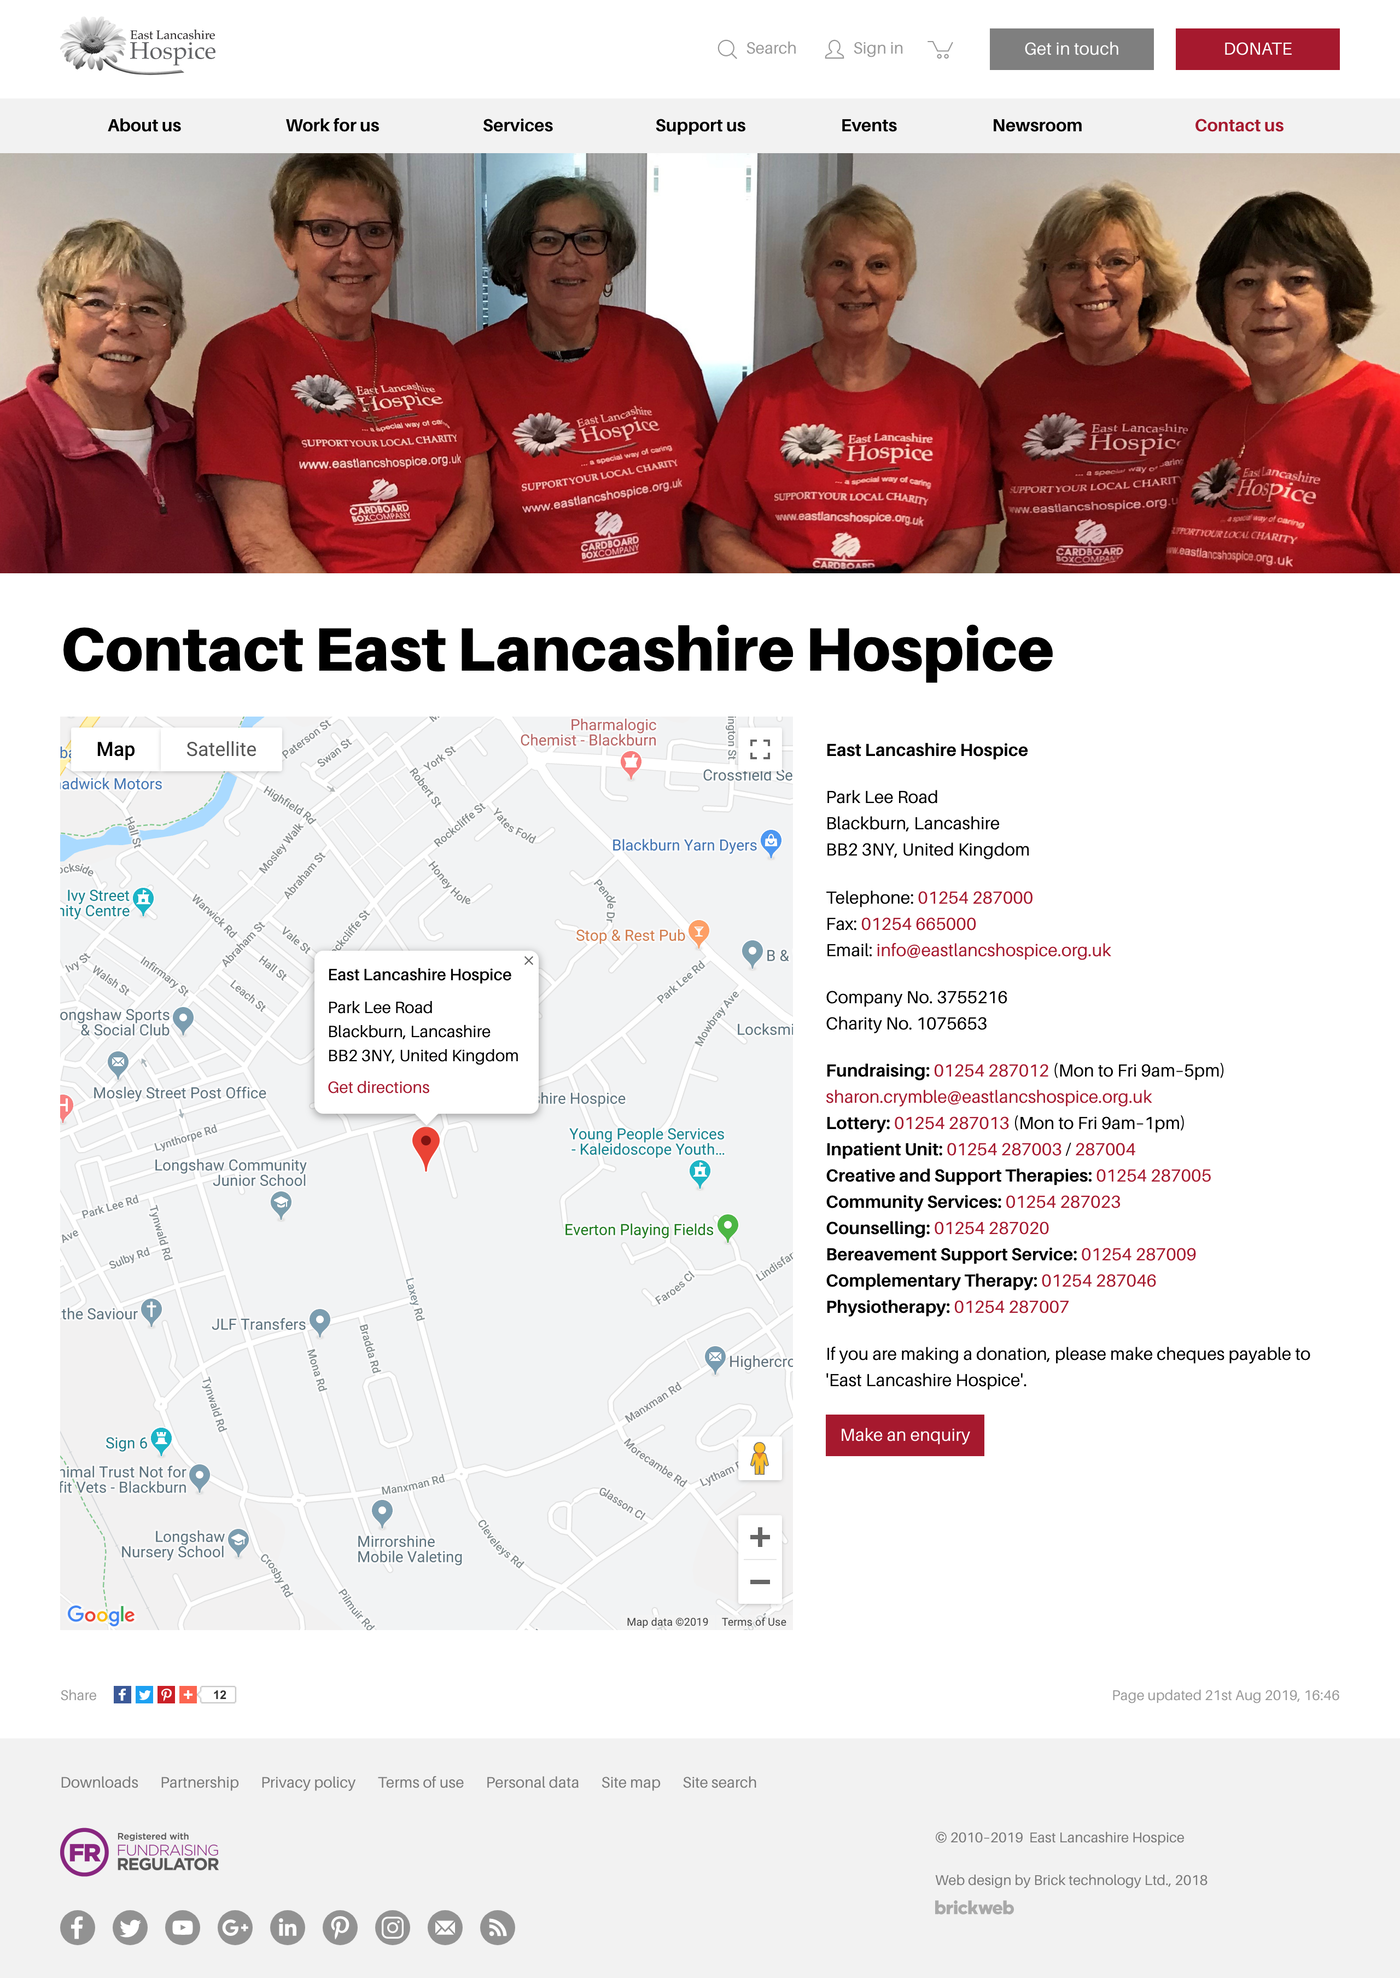 East Lancashire Hospice Сontact us